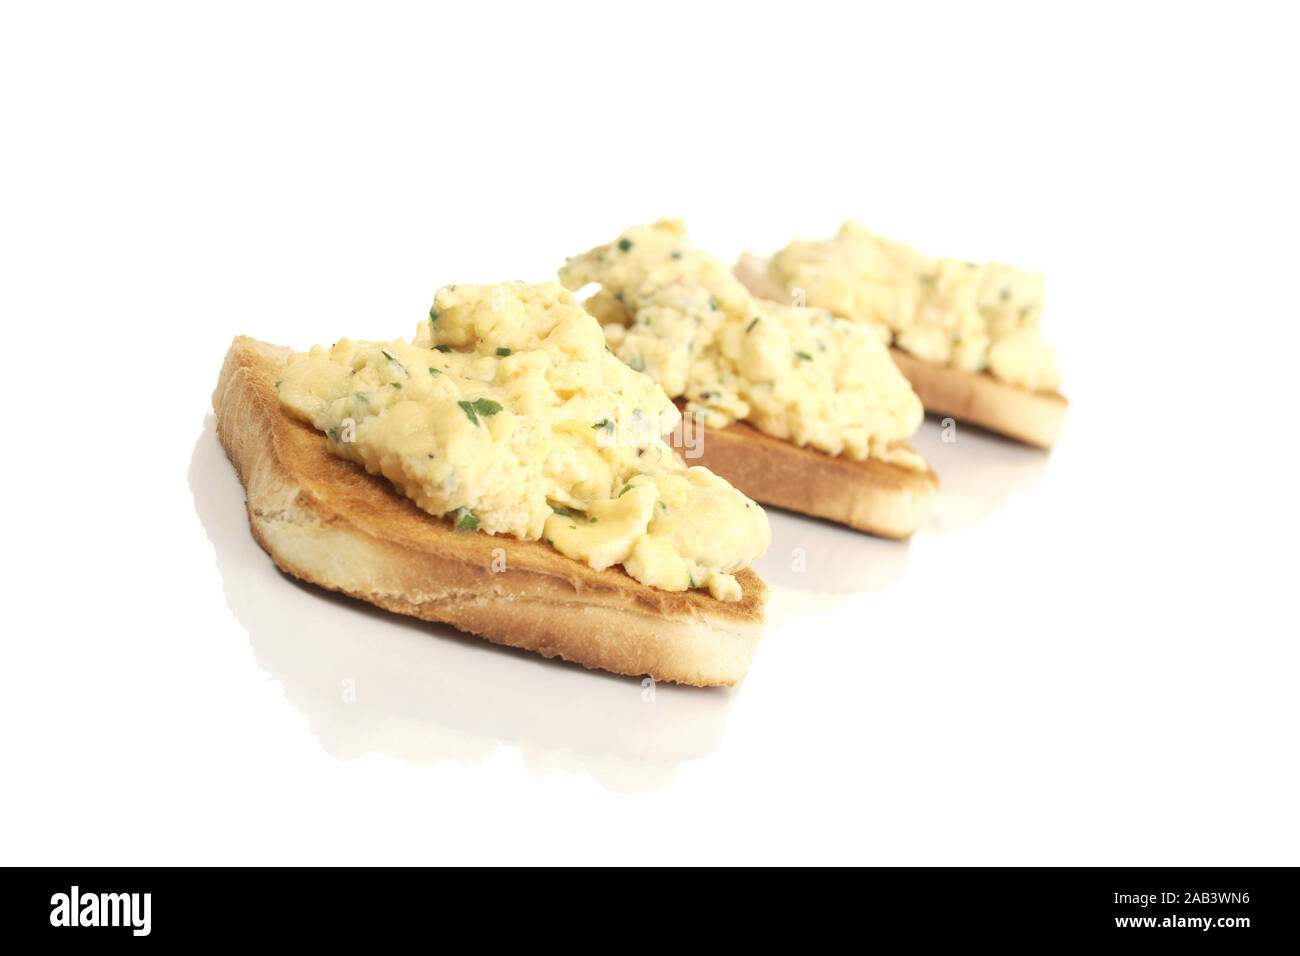 Toastbrot mit Rühreier |Toast with scrambled eggs| Stock Photo